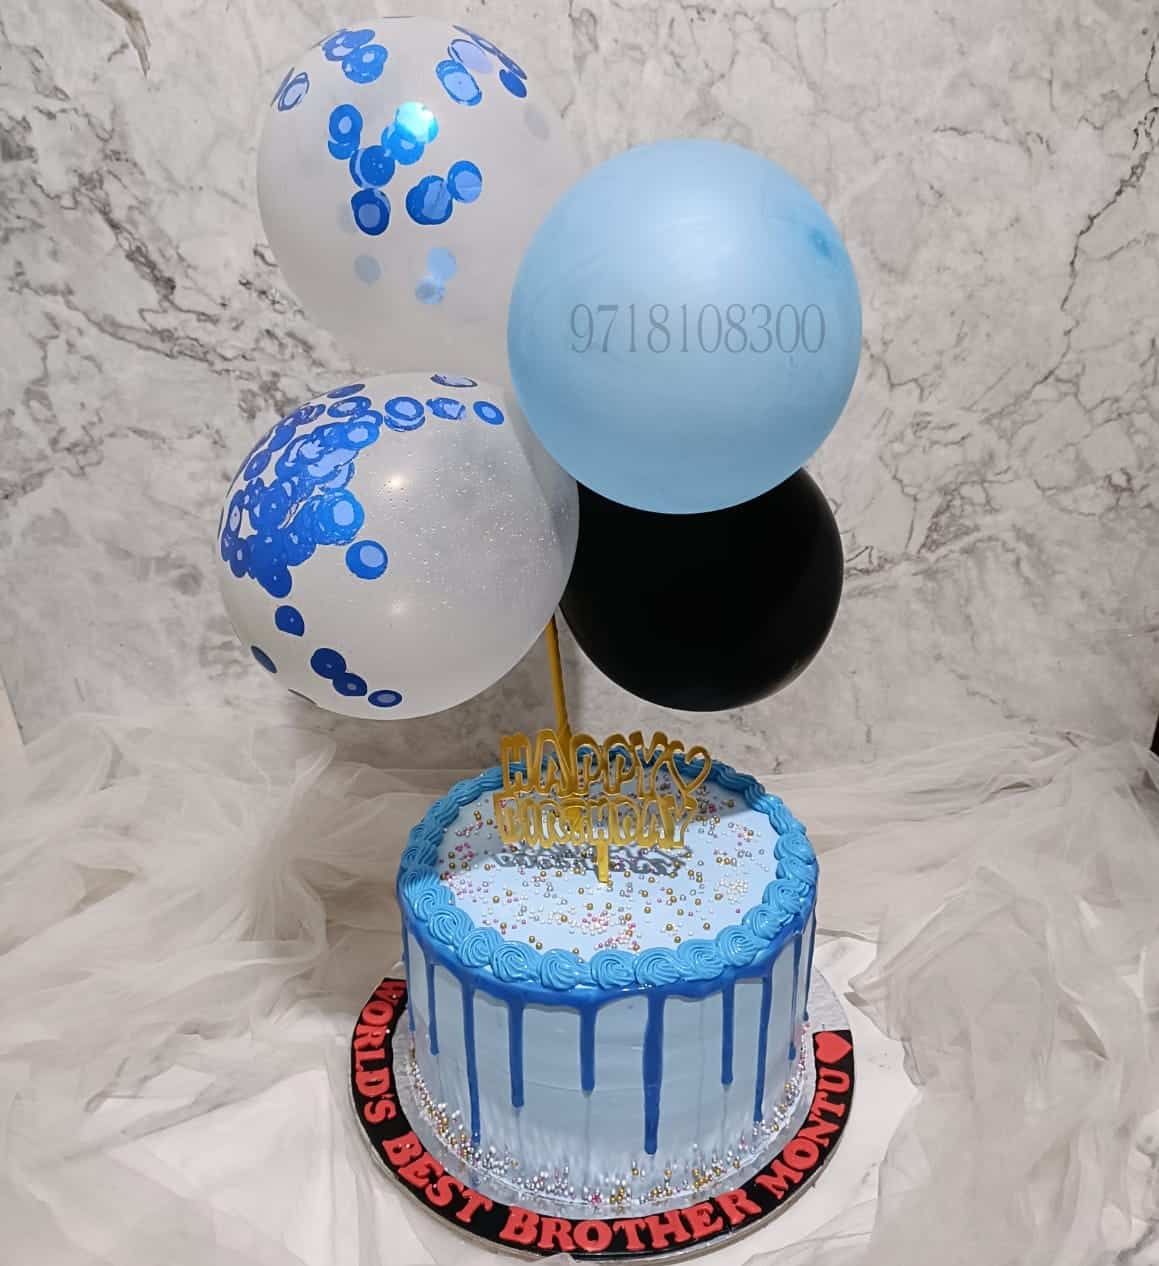 Balloon Design Cake | Yummy cake